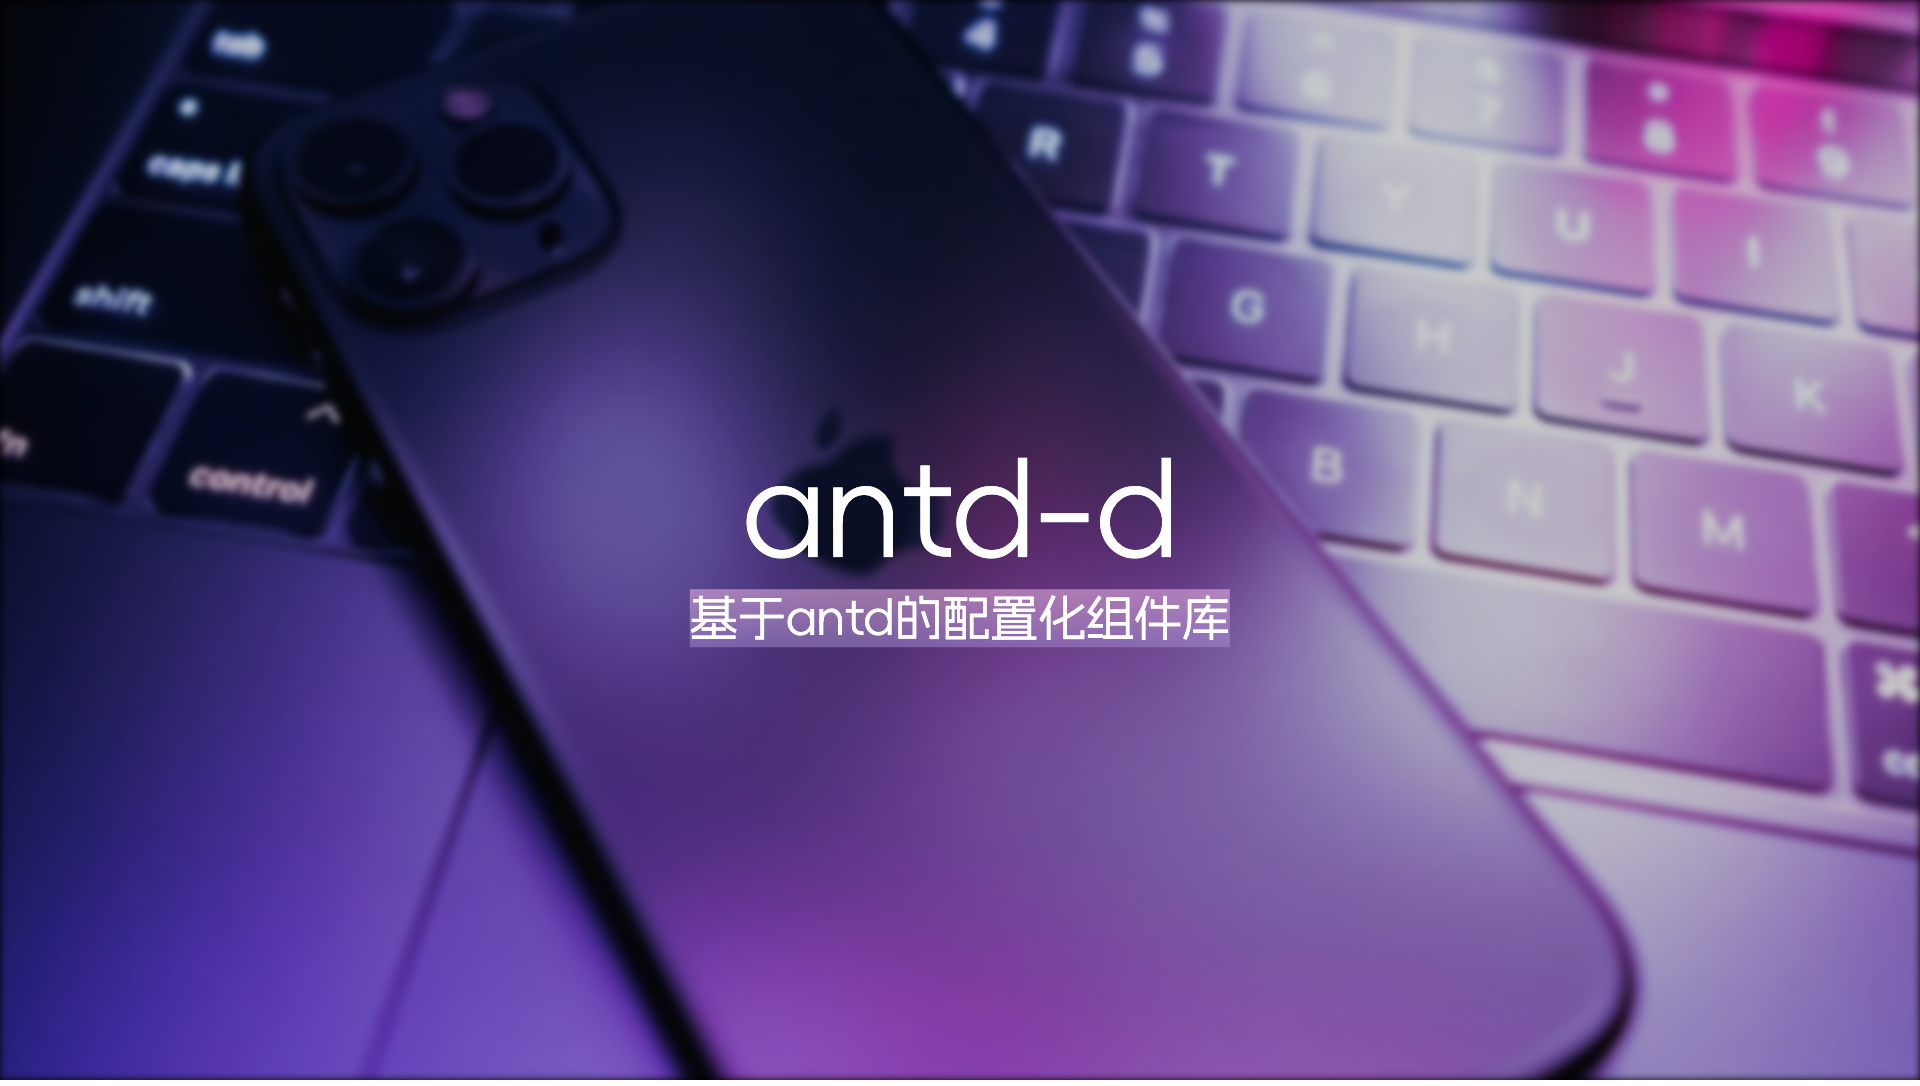 antd-d，一个基于antd的配置化组件库